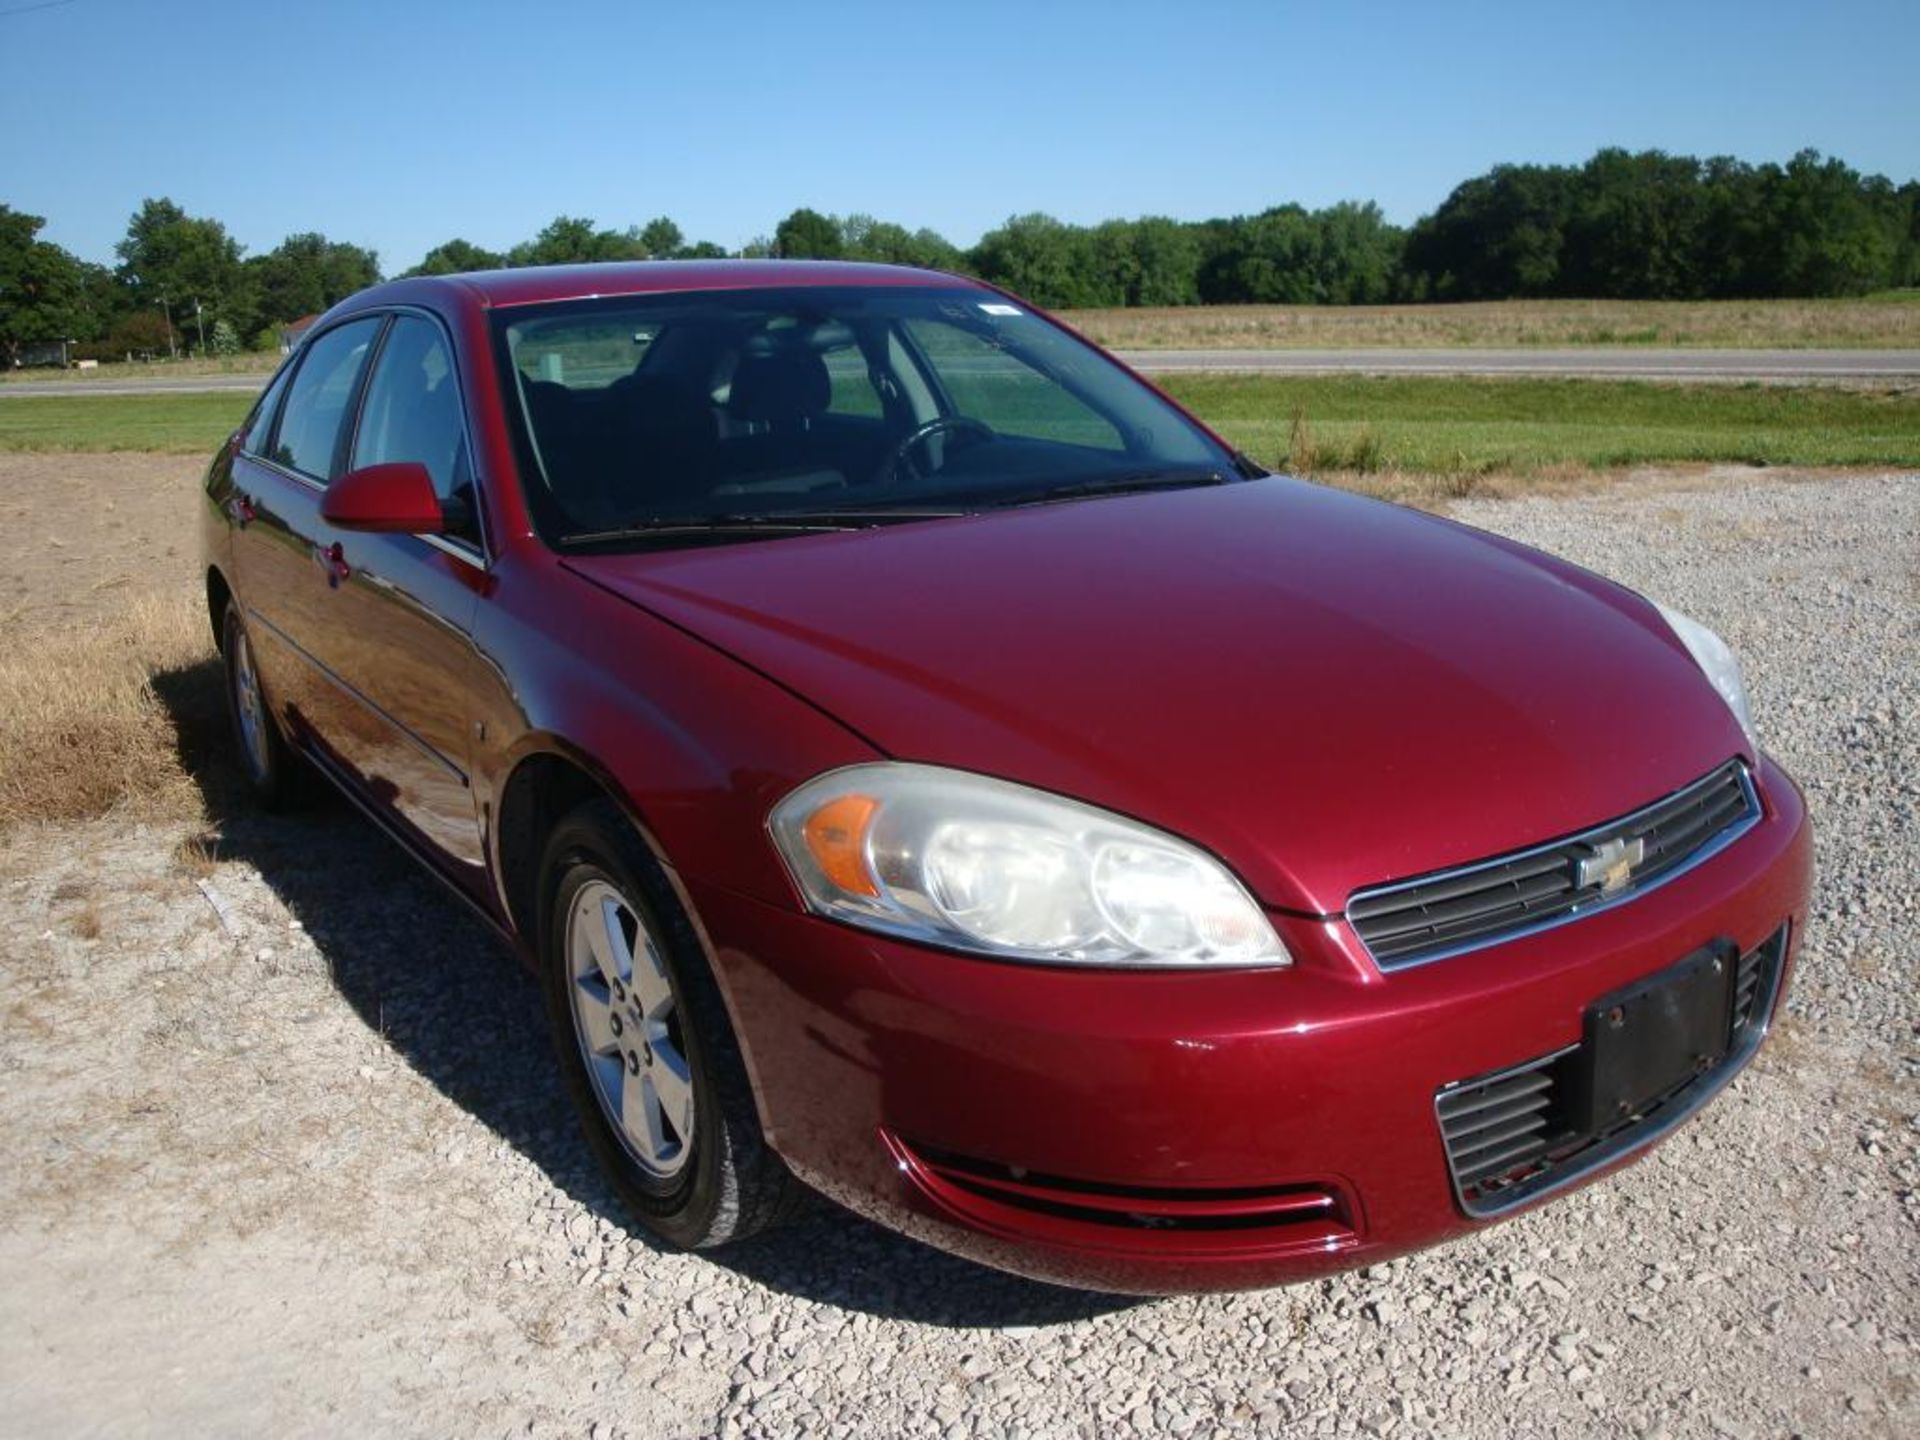 (Title) 2006 Chevrolet Impala,vin 2G1WT58K869365554, 3.5L V6, 72,141 miles - Image 6 of 20